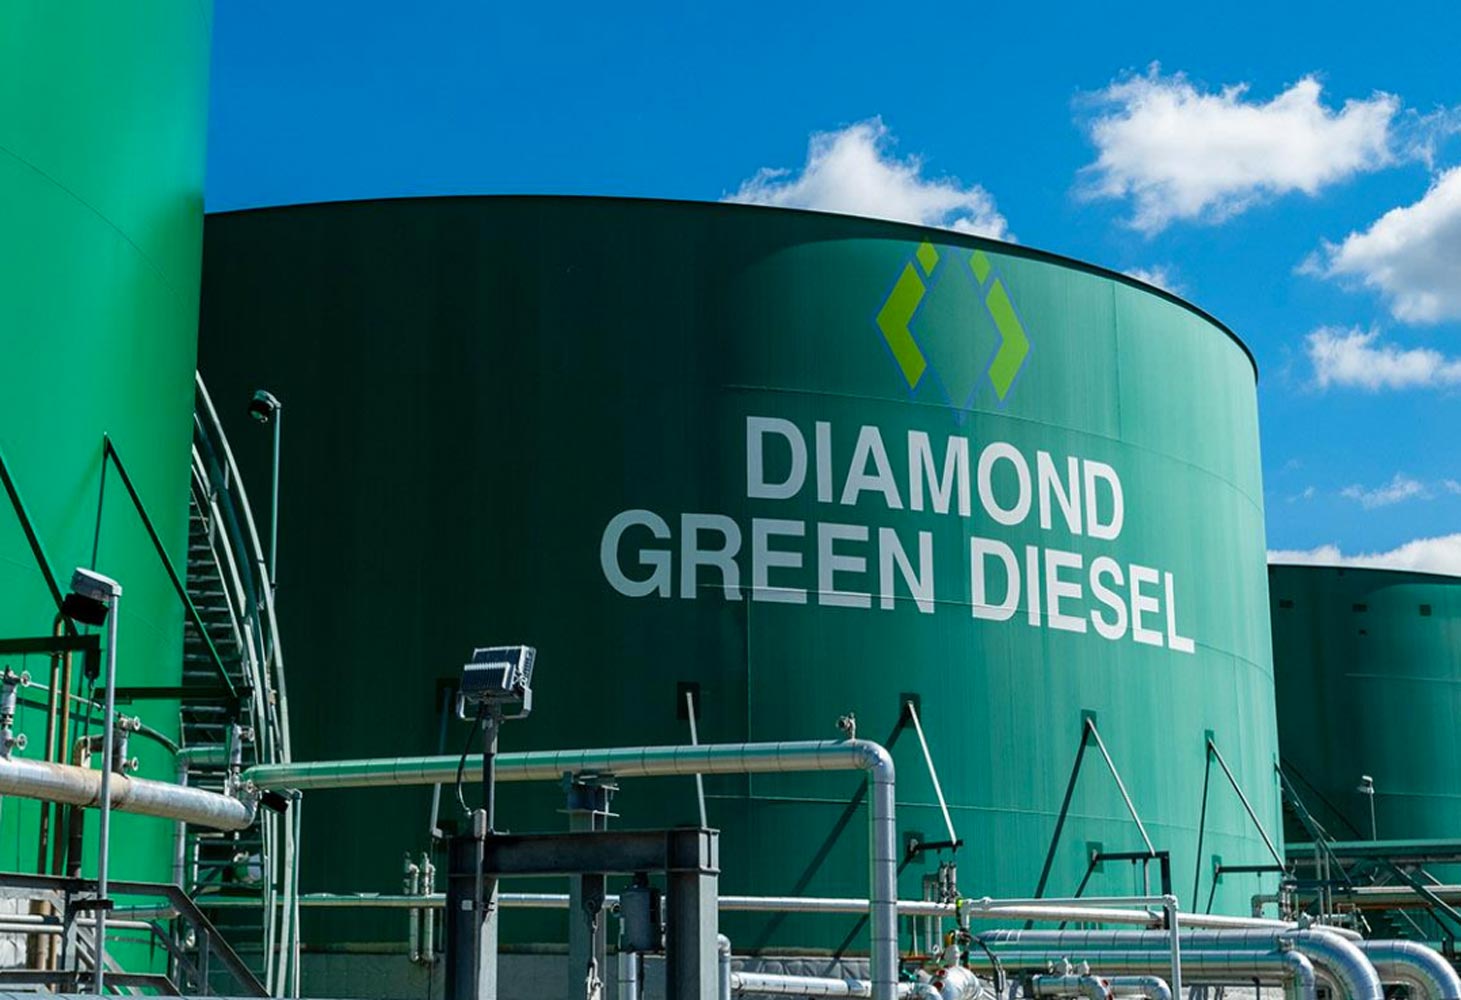 Diamond Green Diesel's renewable diesel plant gets green light